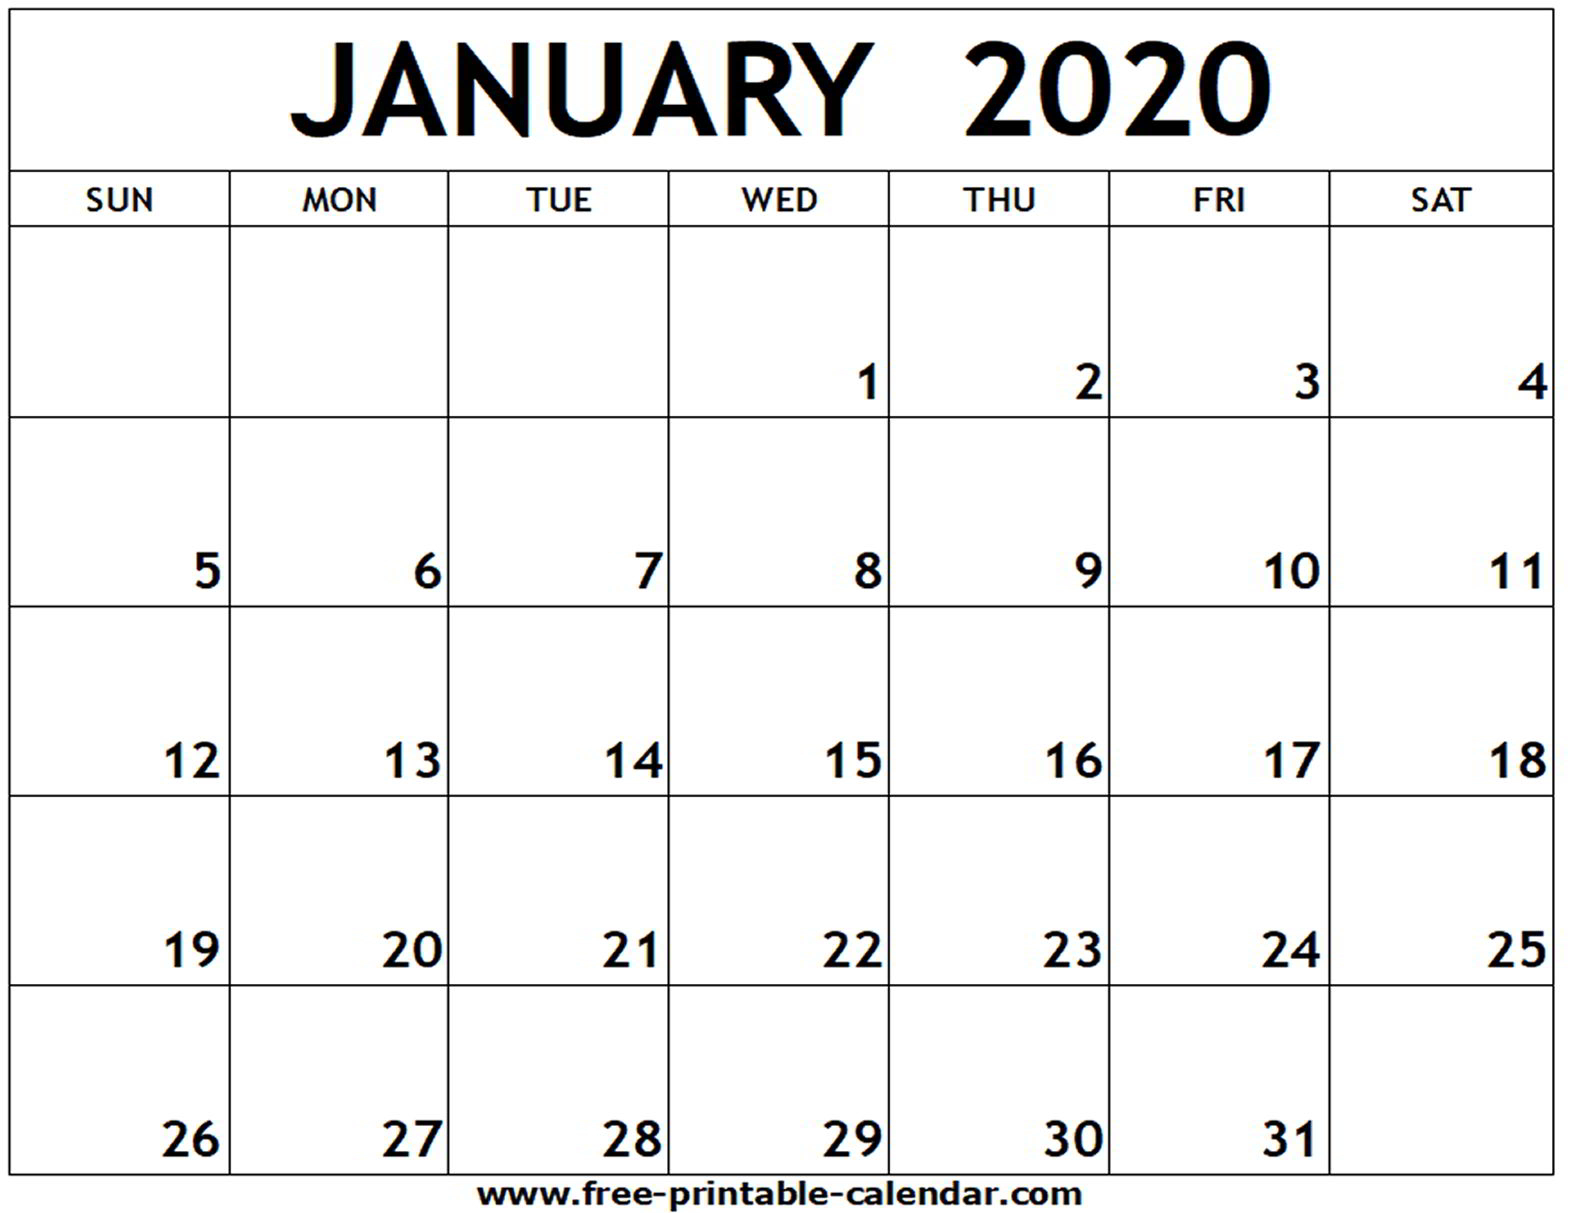 Print Calendar Free 2020 - Wpa.wpart.co